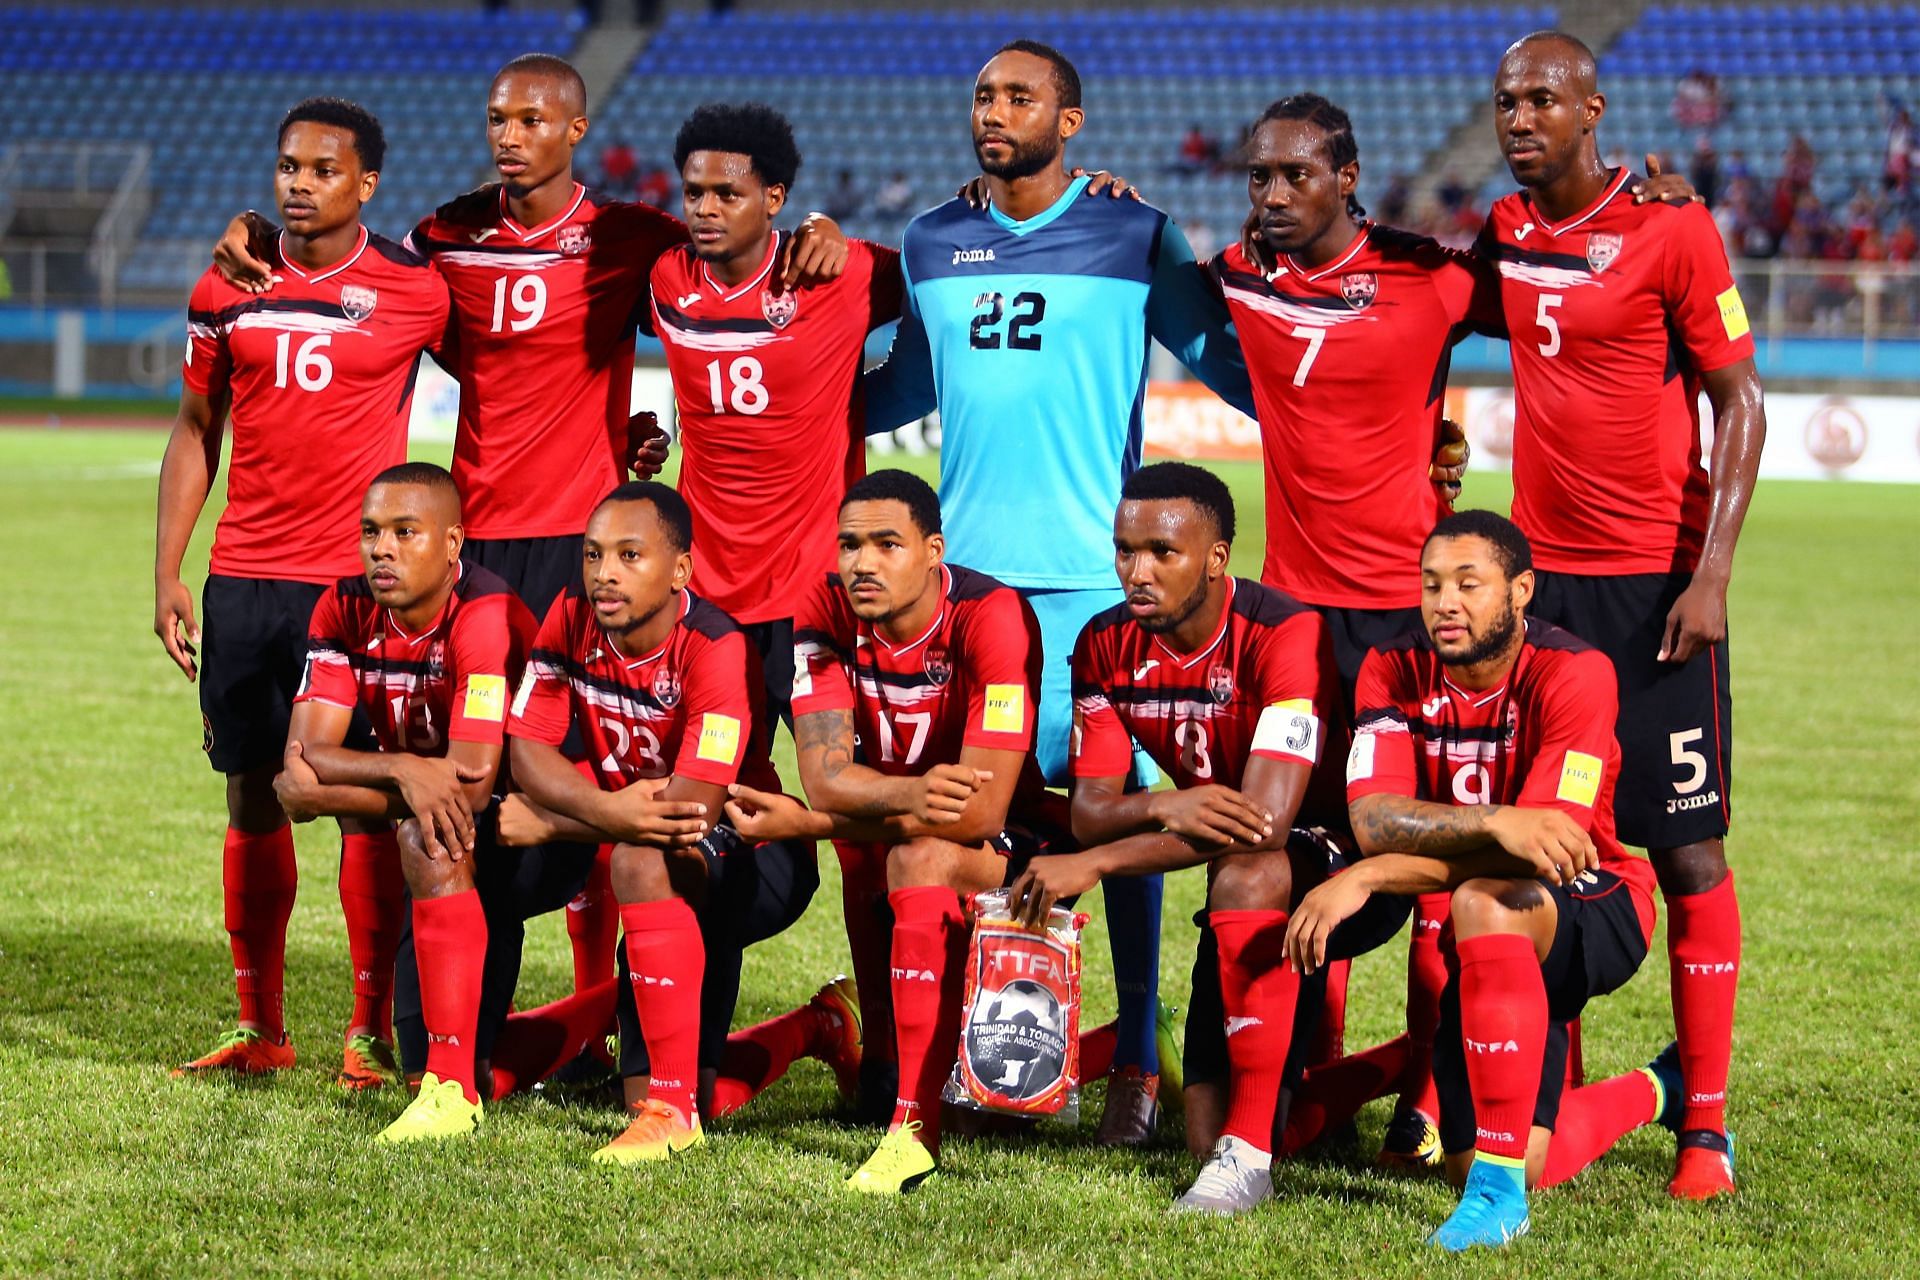 Bahamas face Trinidad and Tobago on Wednesday